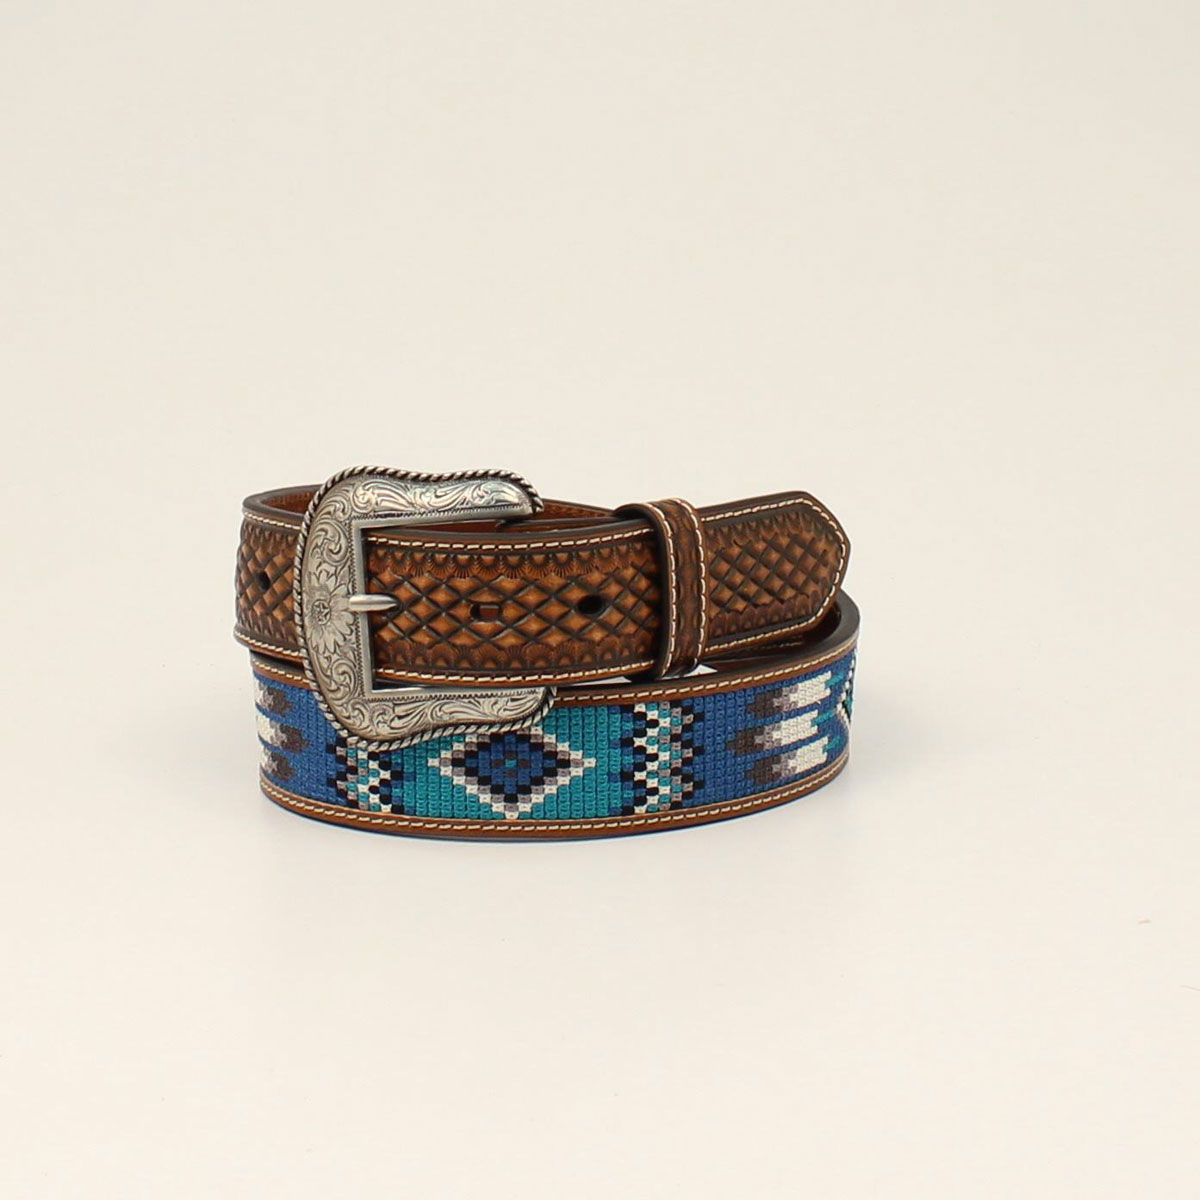 Ariat Men's Southwestern Embroidered Belt - Brown/Blue